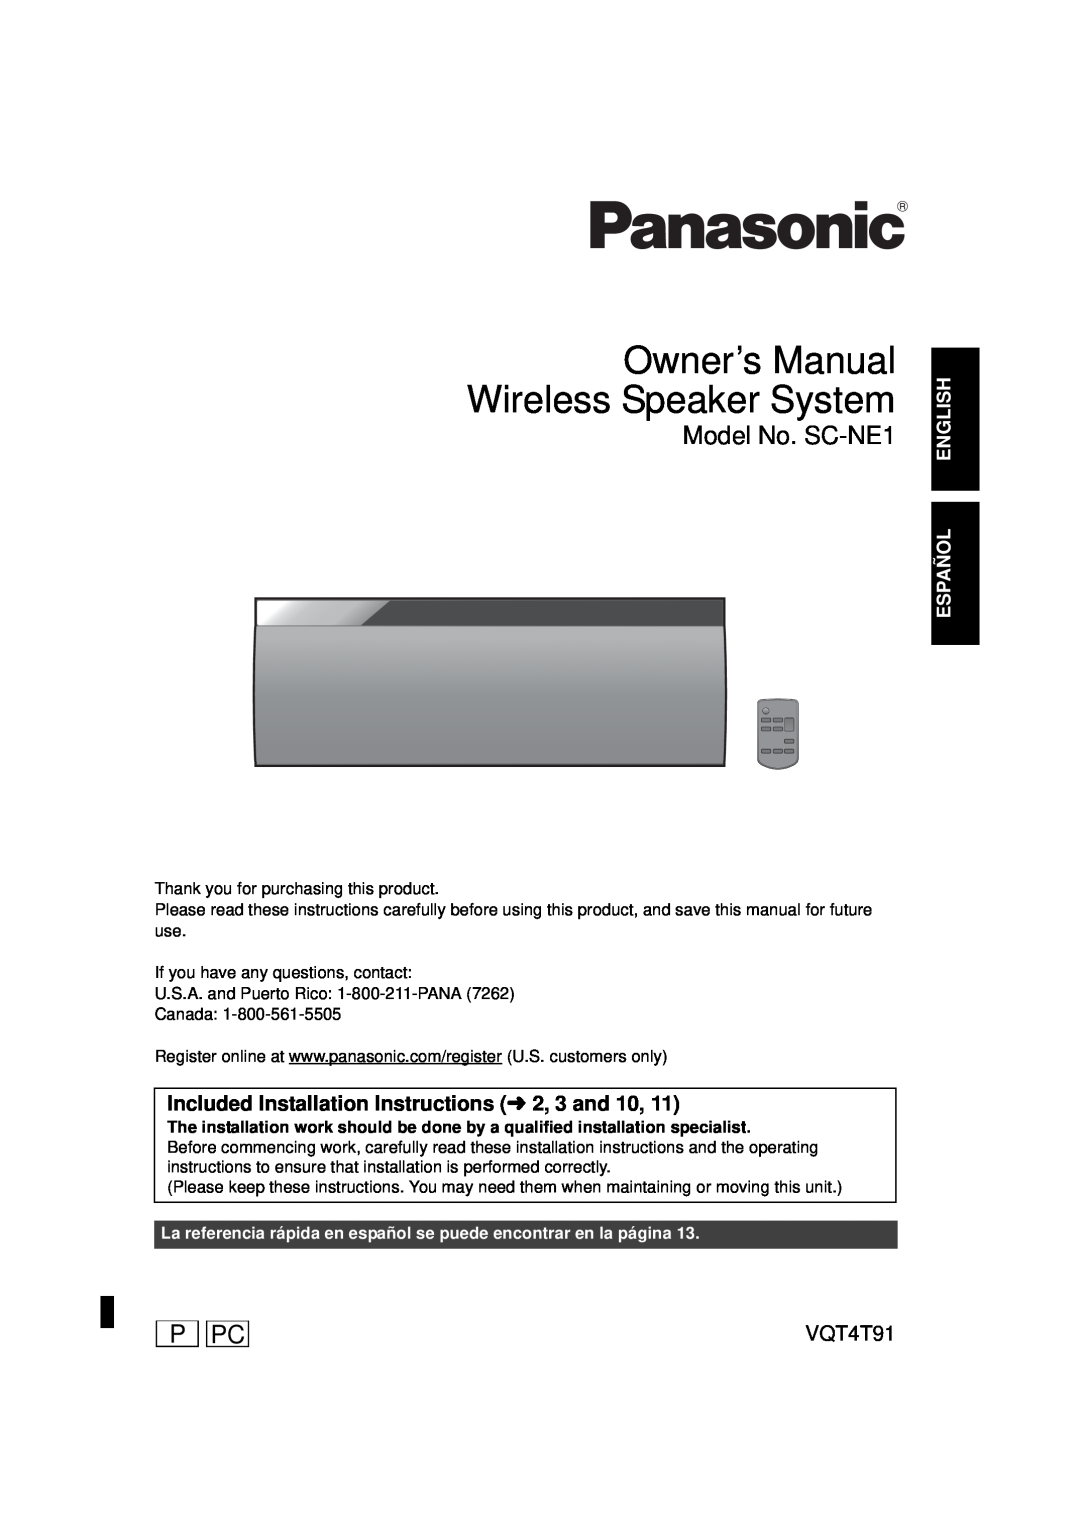 Panasonic owner manual VQT4T91, Español English, Model No. SC-NE1, P Pc, Included Installation Instructions l 2, 3 and 